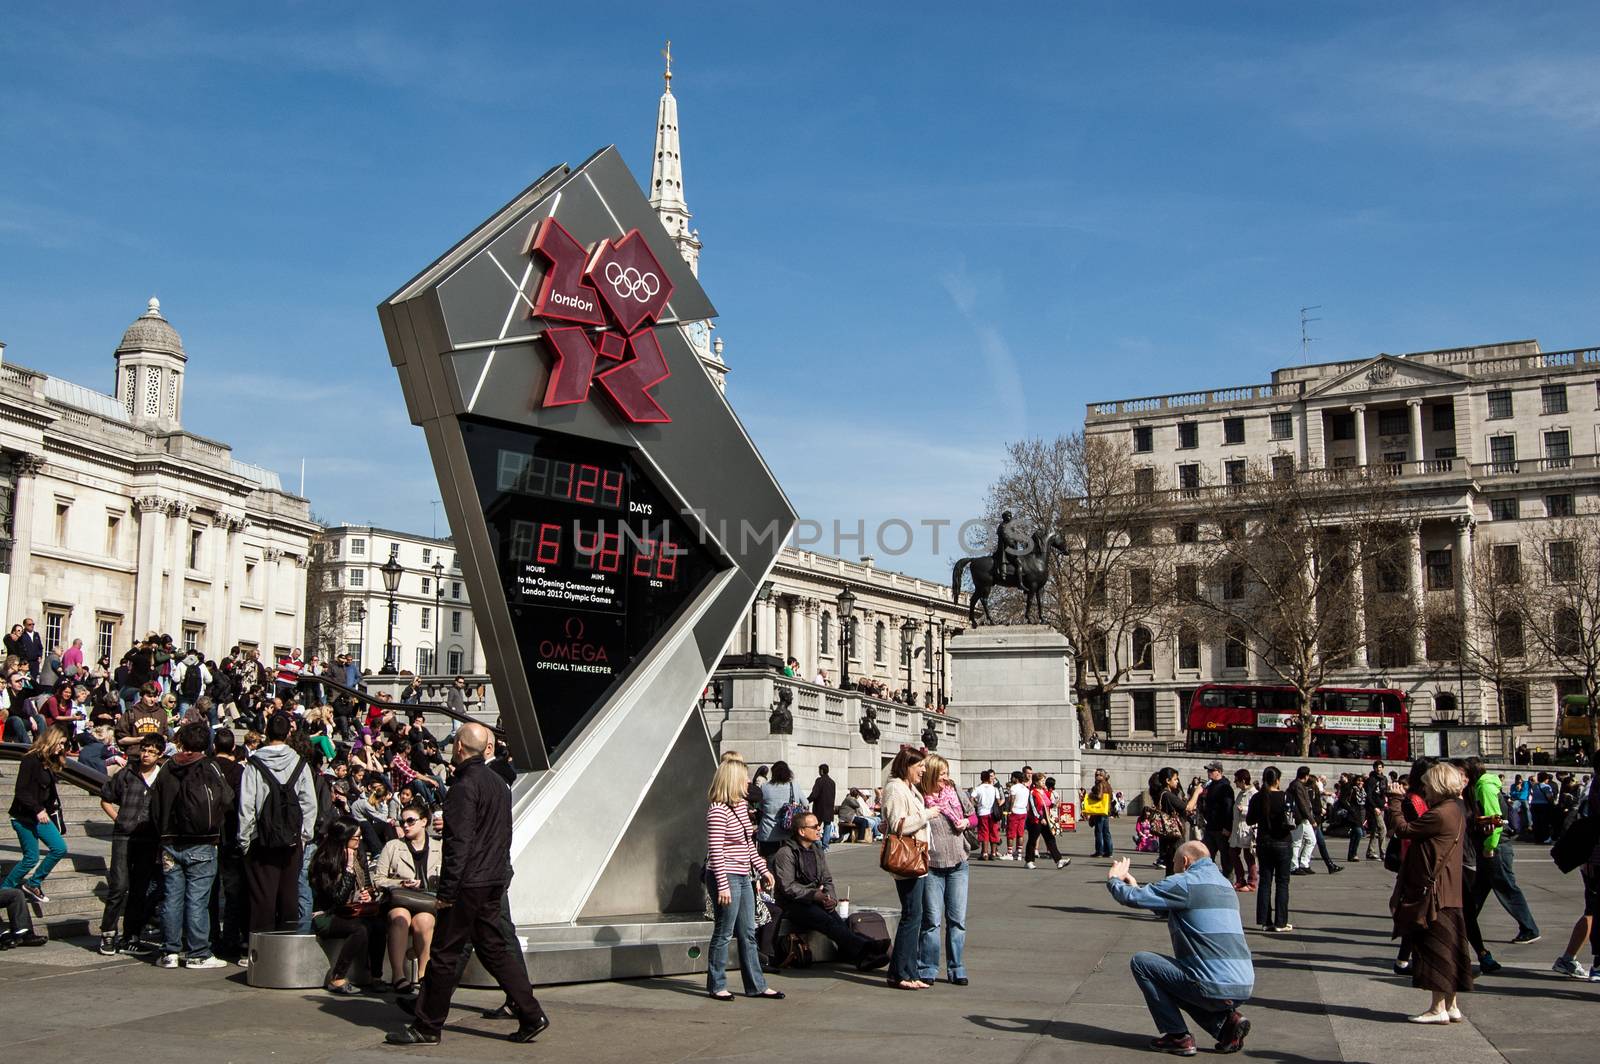 Tourists at London Olympics Clock, Trafalgar Square by BasPhoto